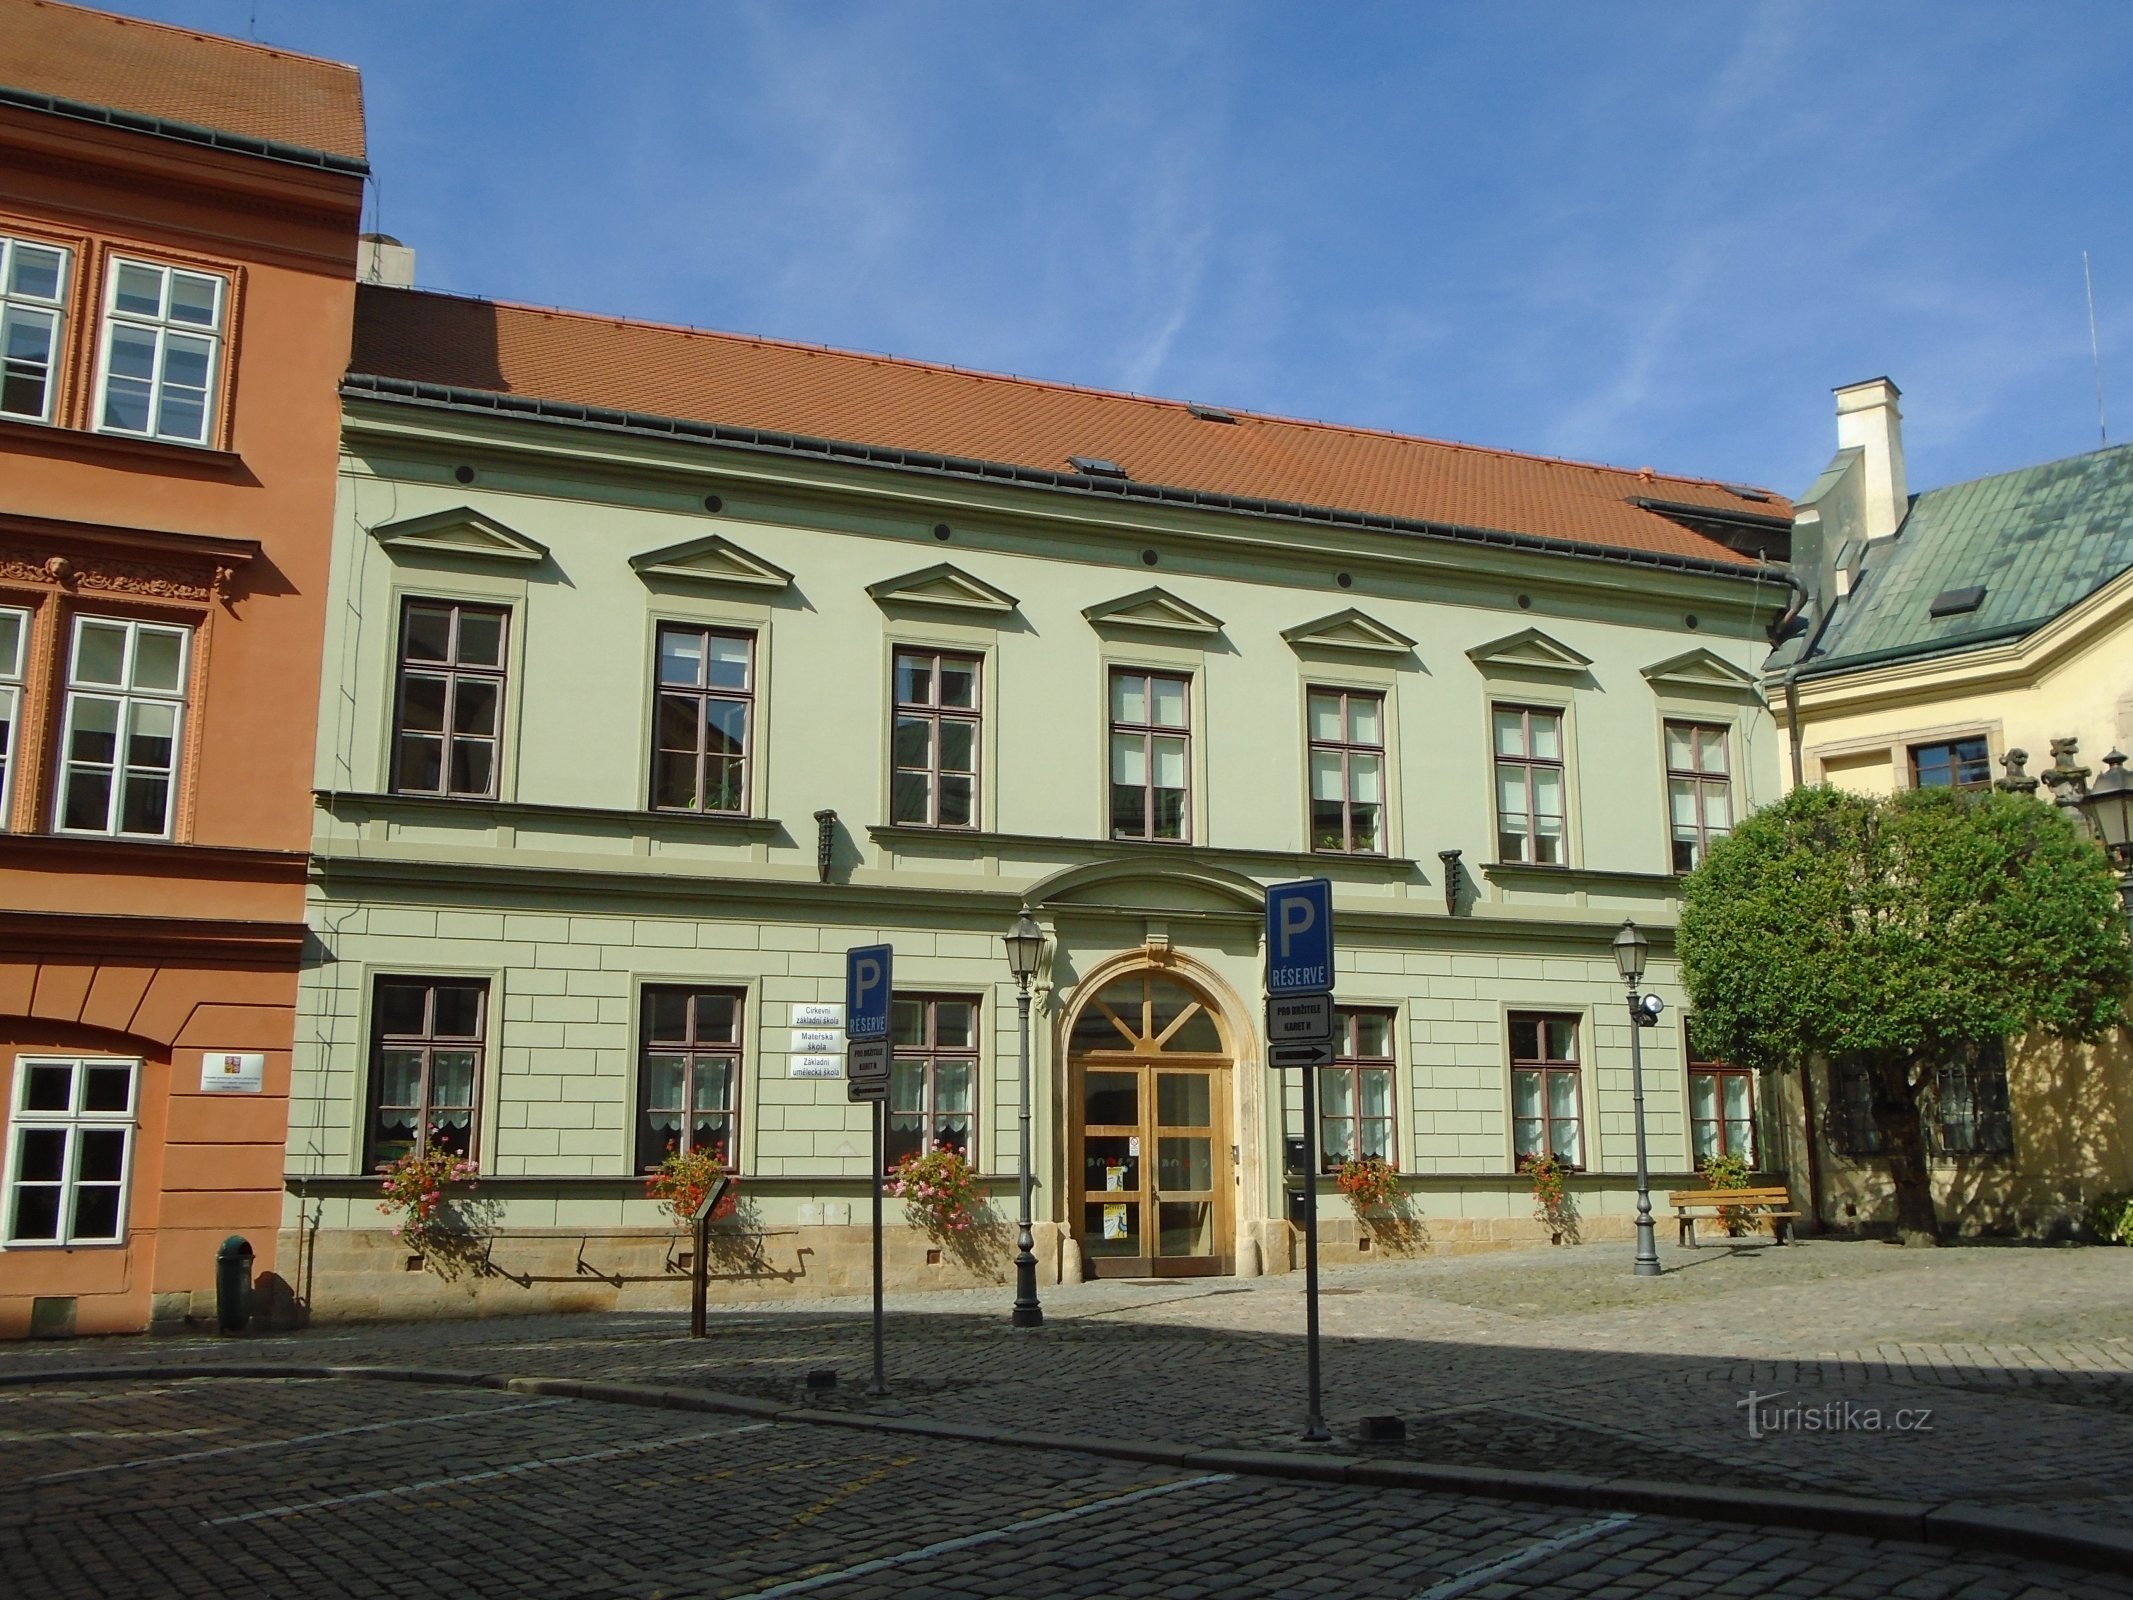 På slottet nr. 90 (Hradec Králové, 16.9.2018. oktober XNUMX)